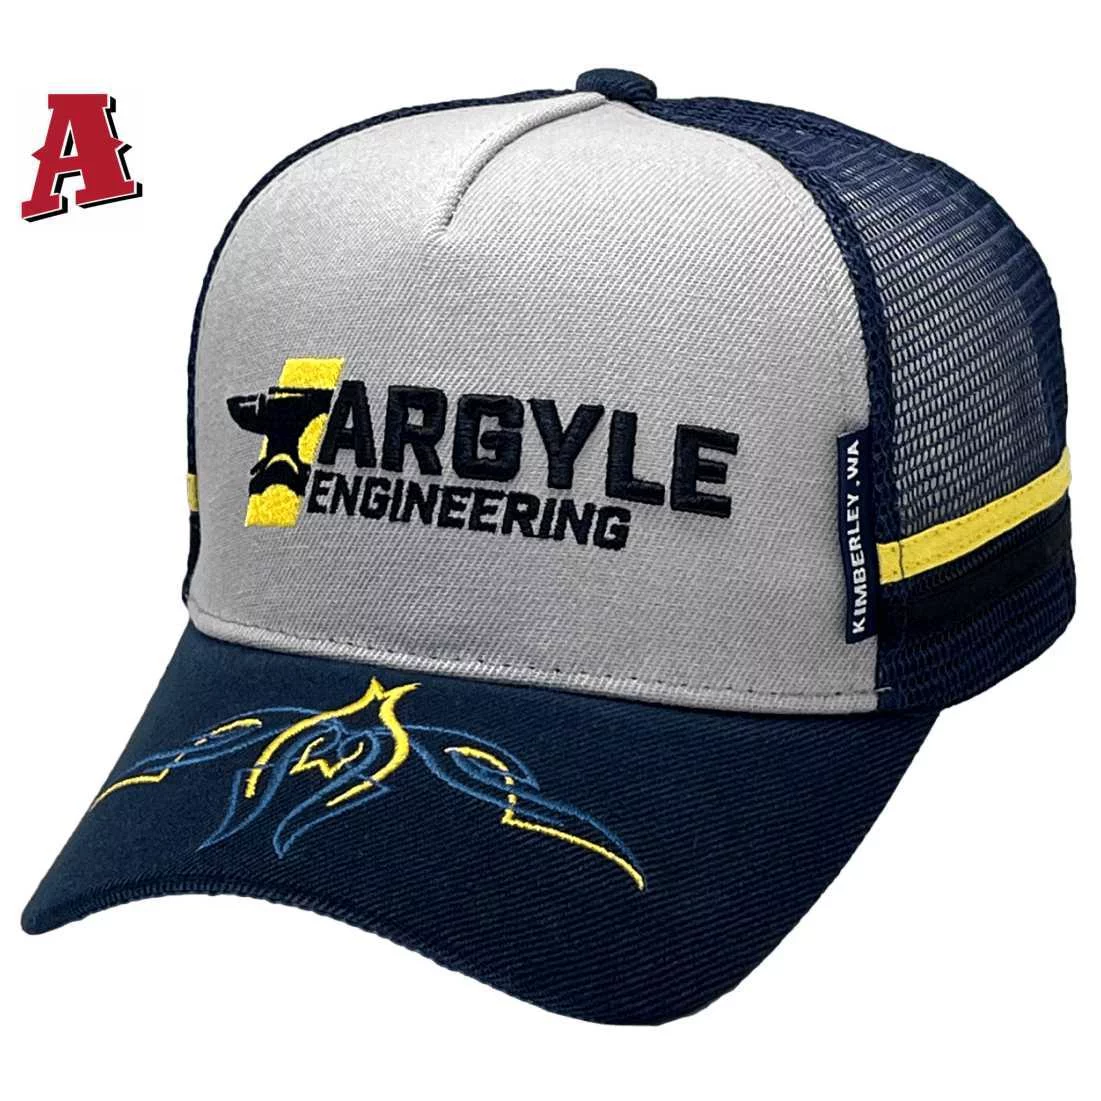 Argyle Engineering Kununurra WA LP Power Aussie Trucker Hat LP with Australian Head Fit Crown and Double Side Bands Grey Navy Yellow